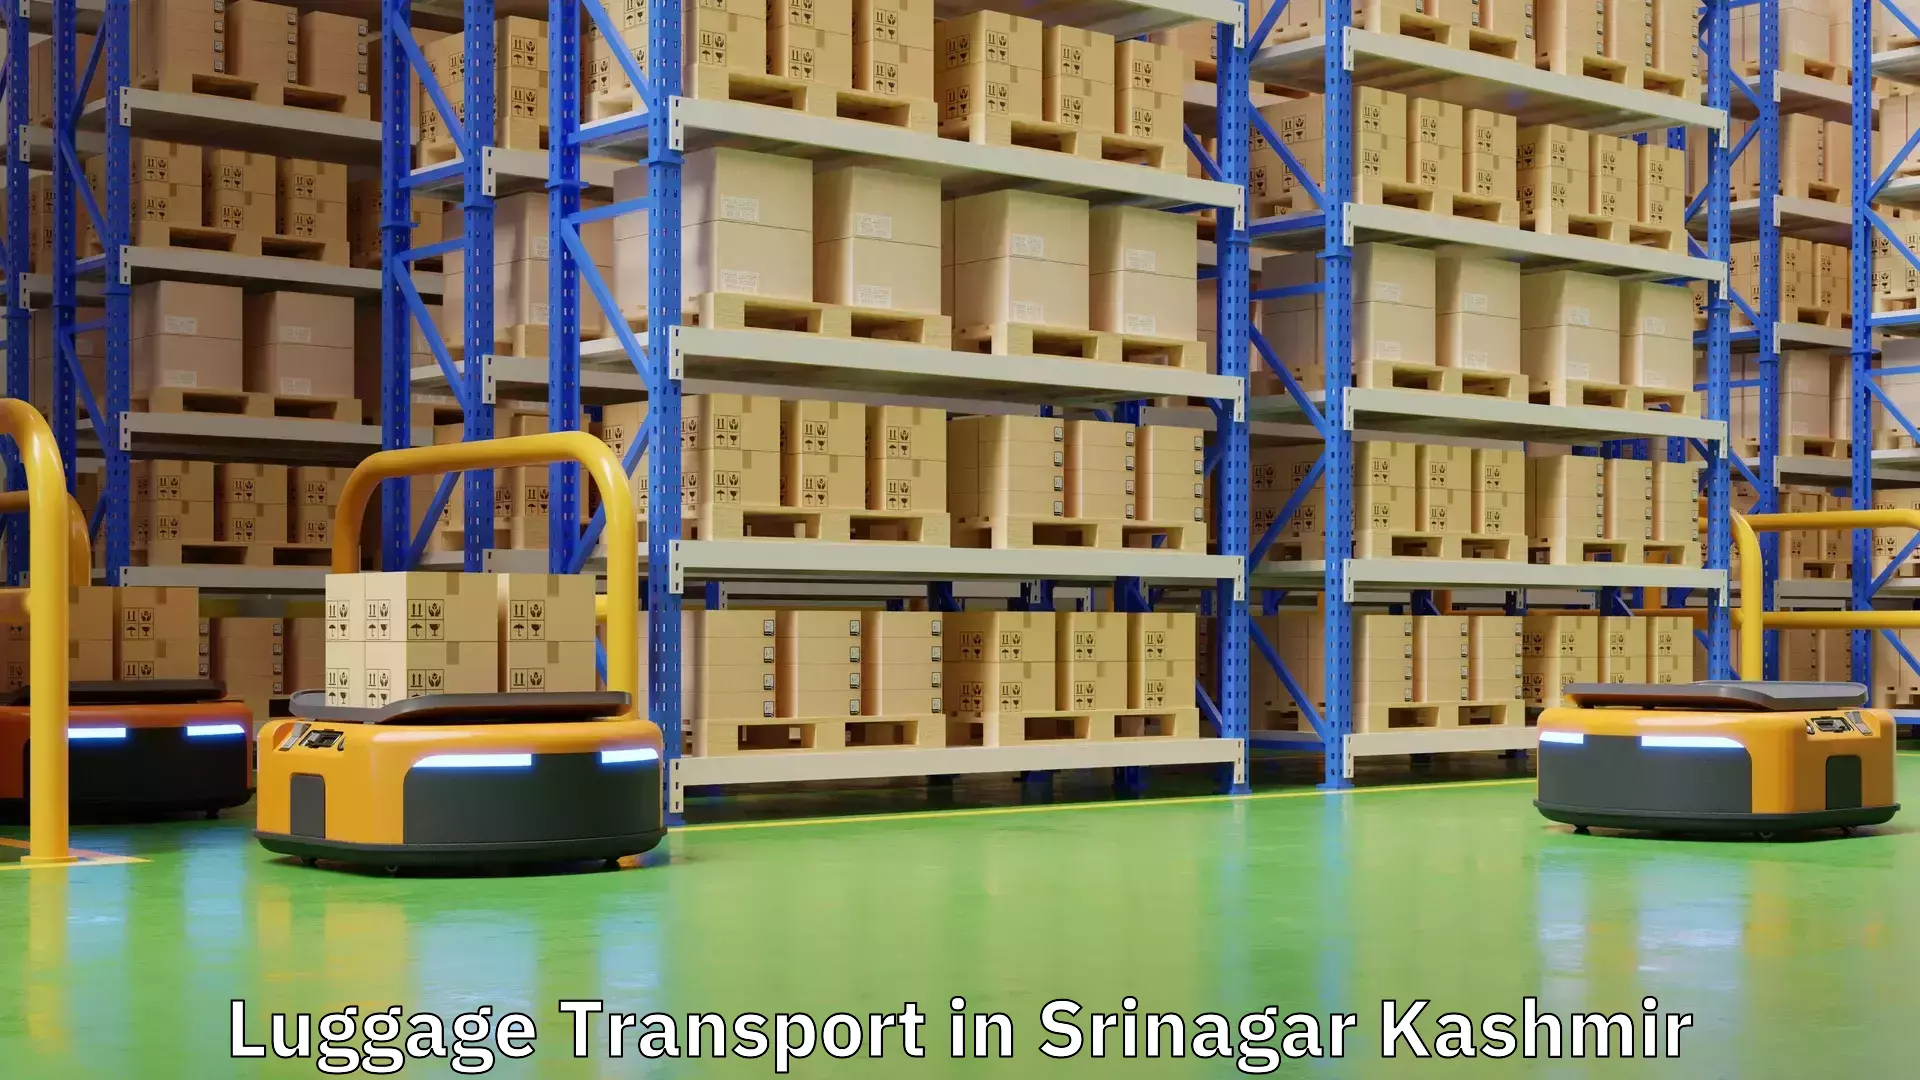 Online luggage shipping booking in Srinagar Kashmir